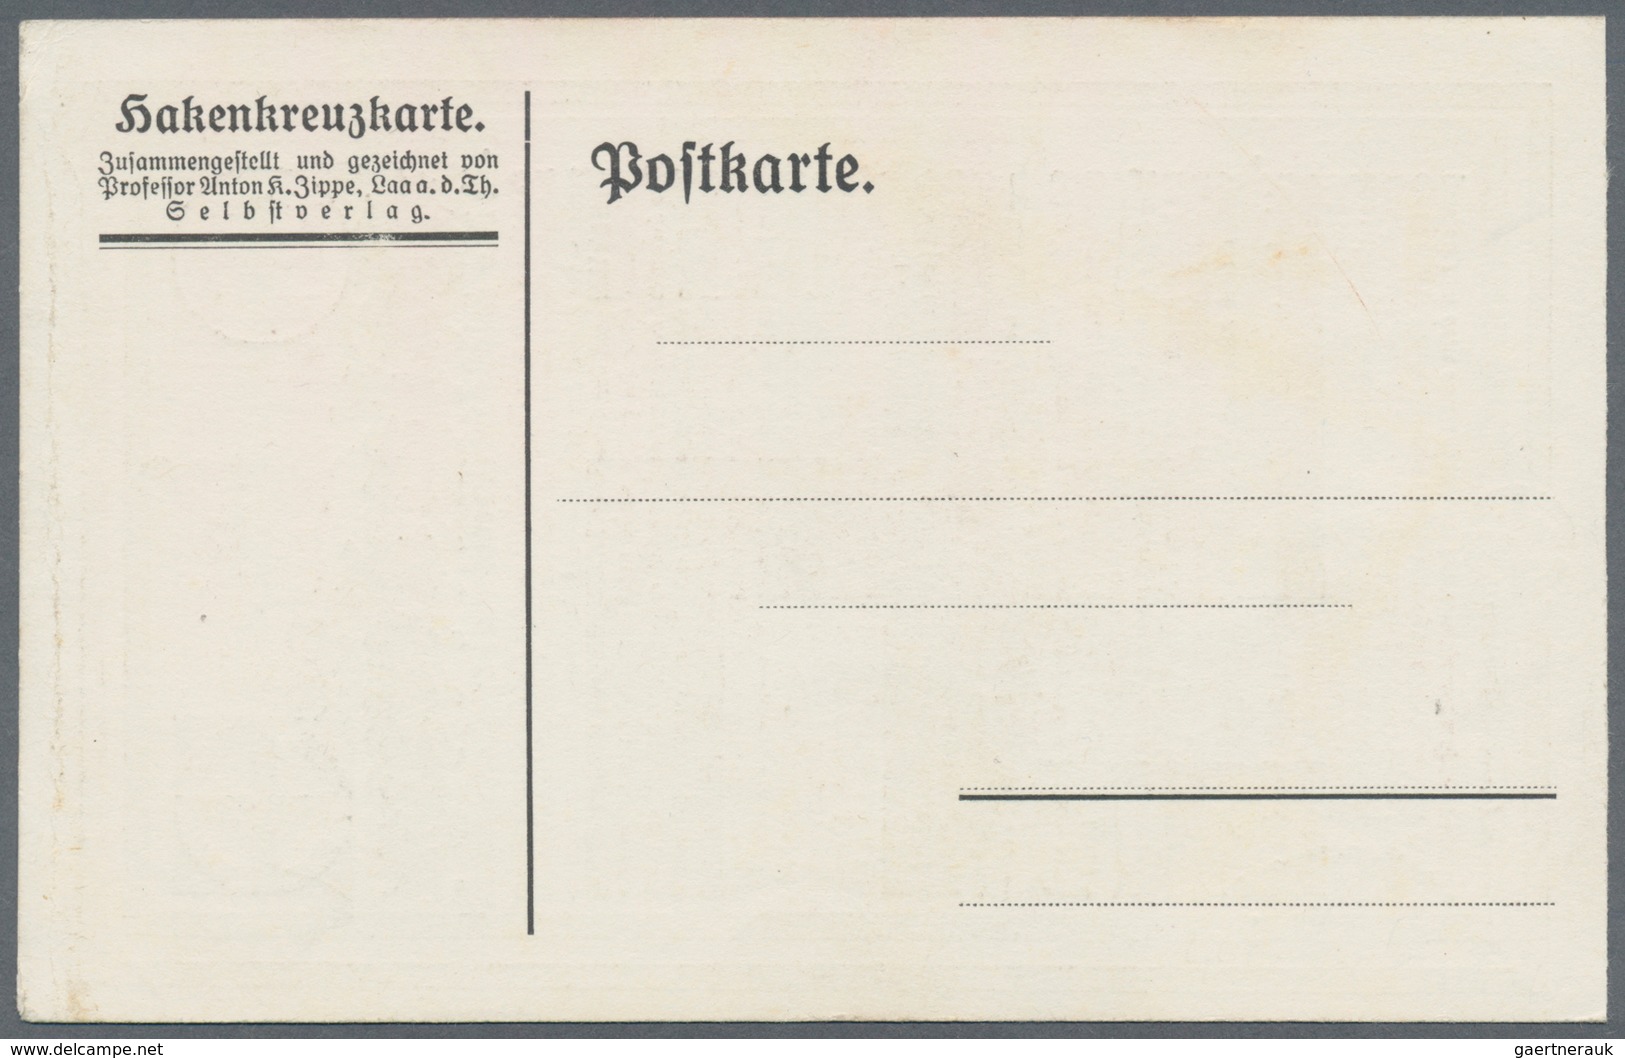 Ansichtskarten: Propaganda: 1929! Germany Swastika Hakenkreuz Propaganda Card 1929. Das Urheilige Ha - Political Parties & Elections